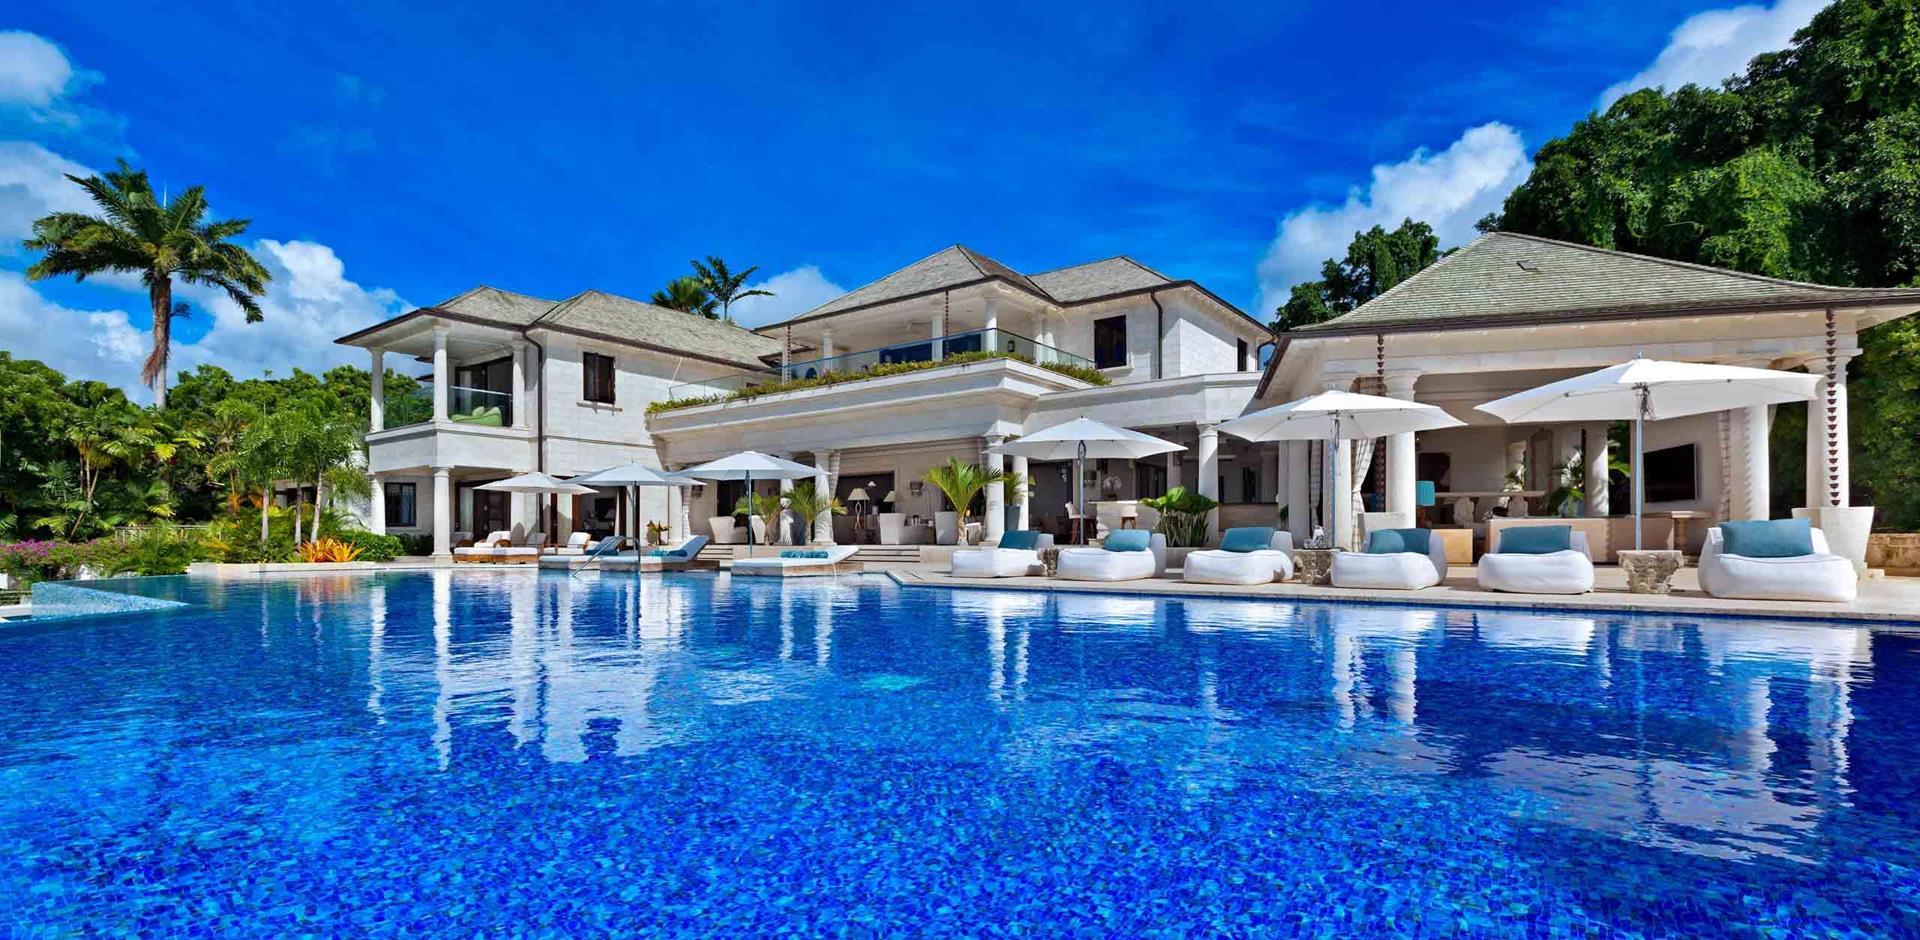 Pool area, Whispering Waters, Barbados, Caribbean